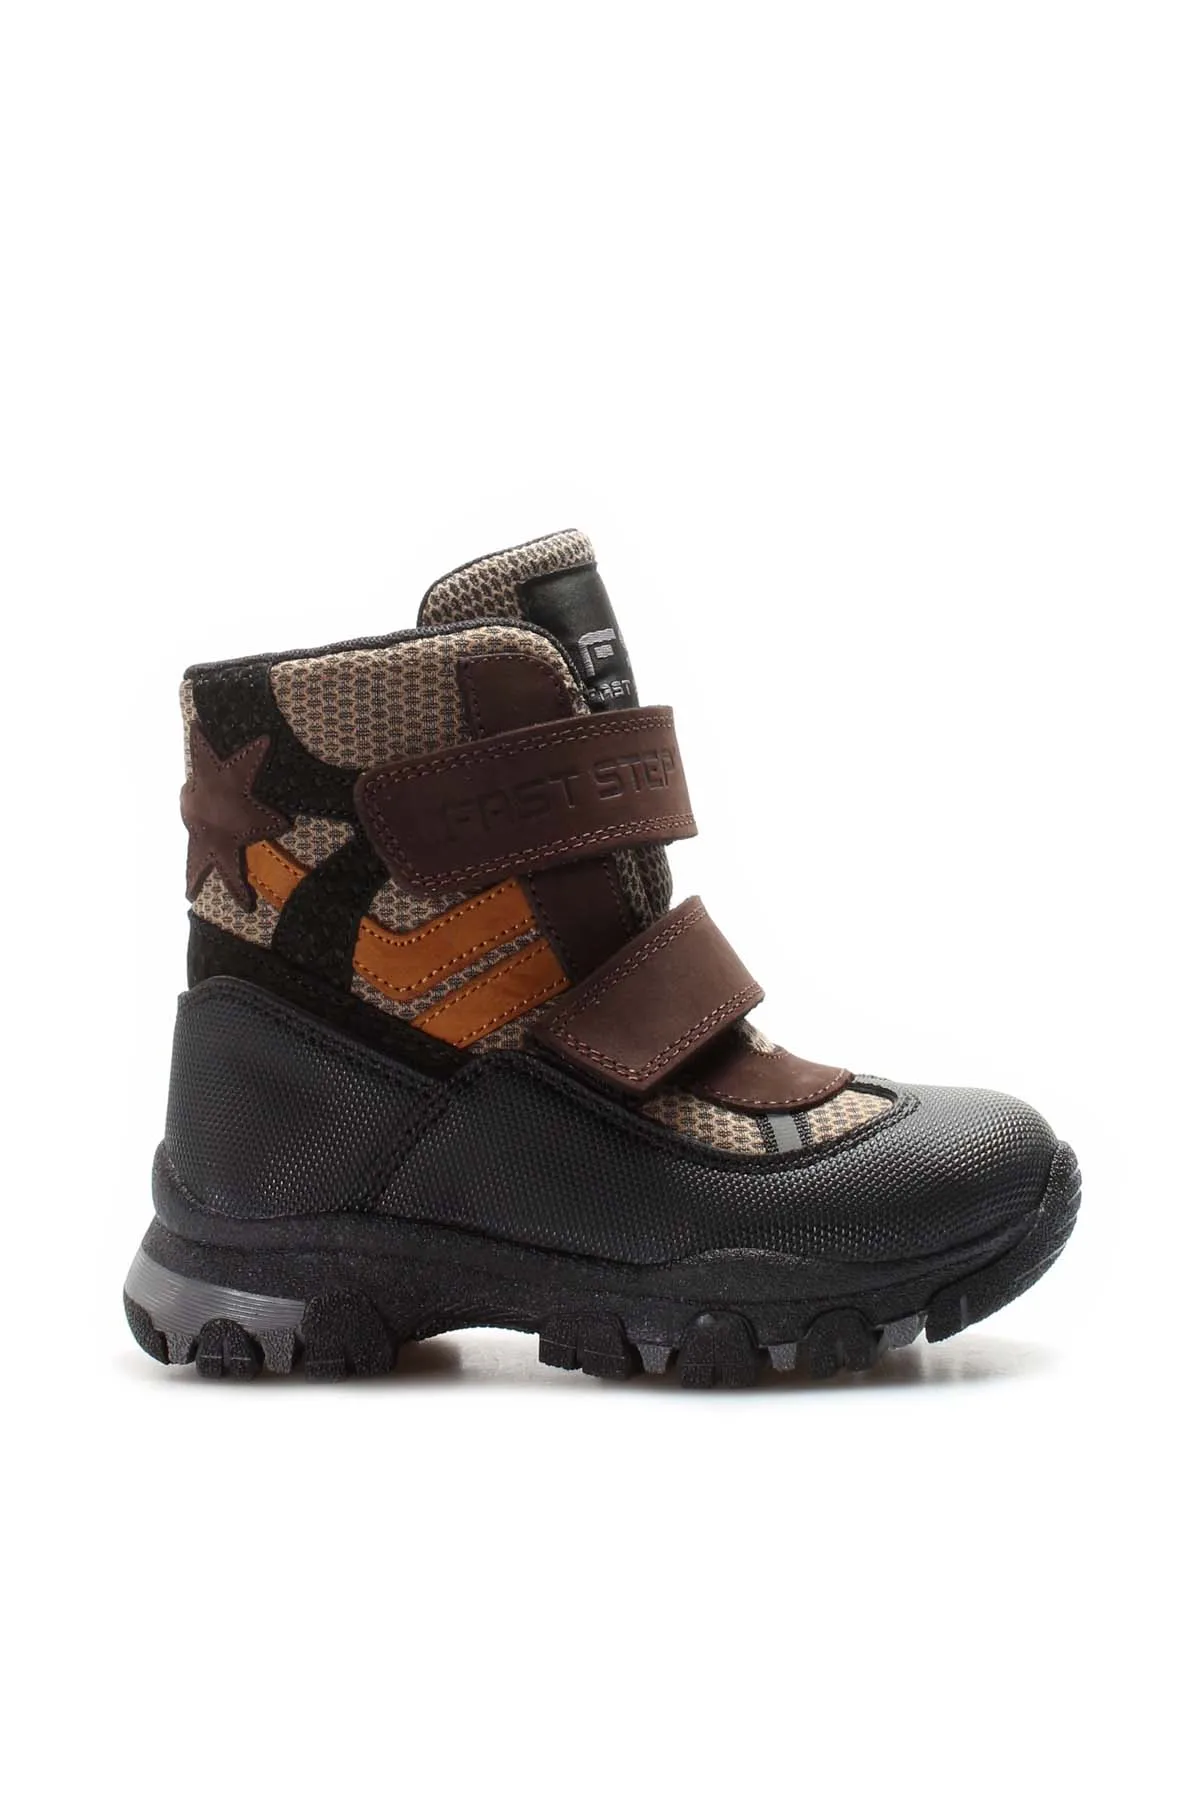 Genuine Leather Furry Unisex Child Sports Boots 574 KFA910